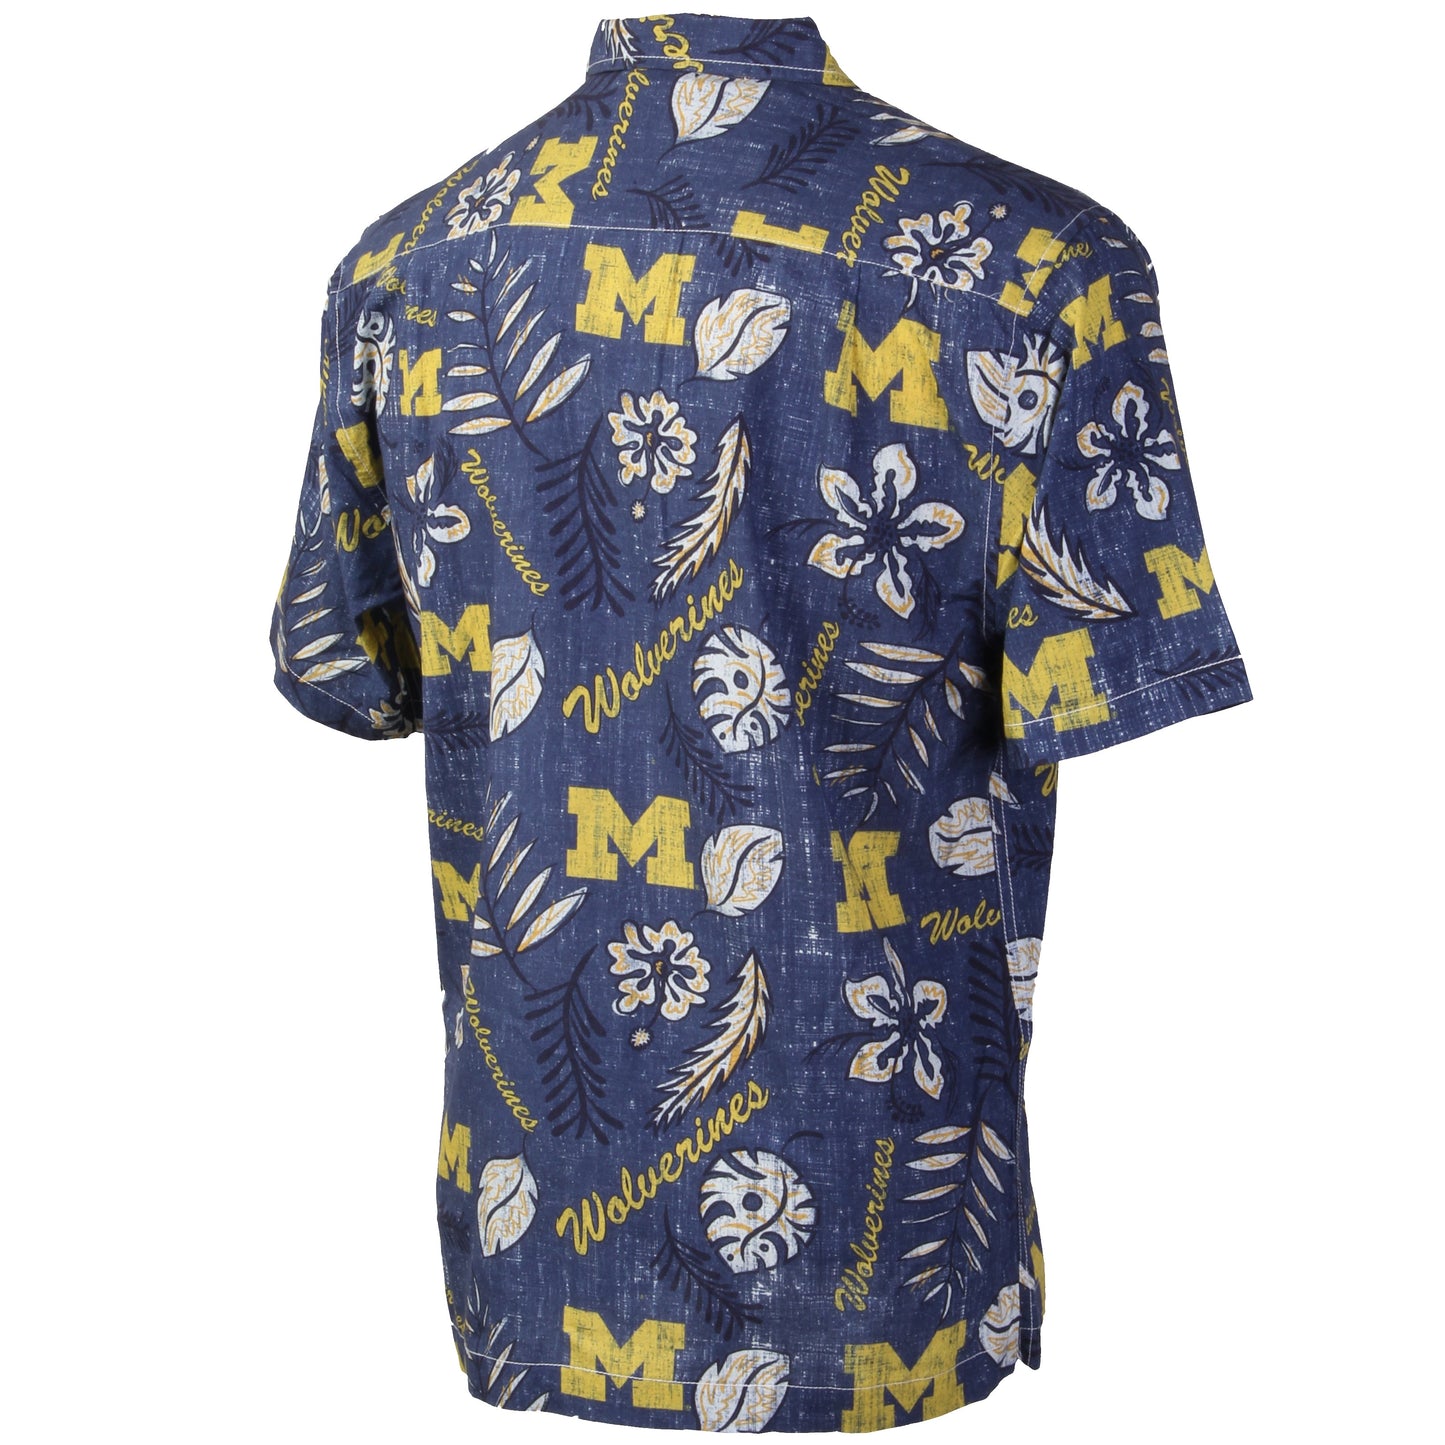 Michigan Wolverines Men's Vintage Floral Shirt